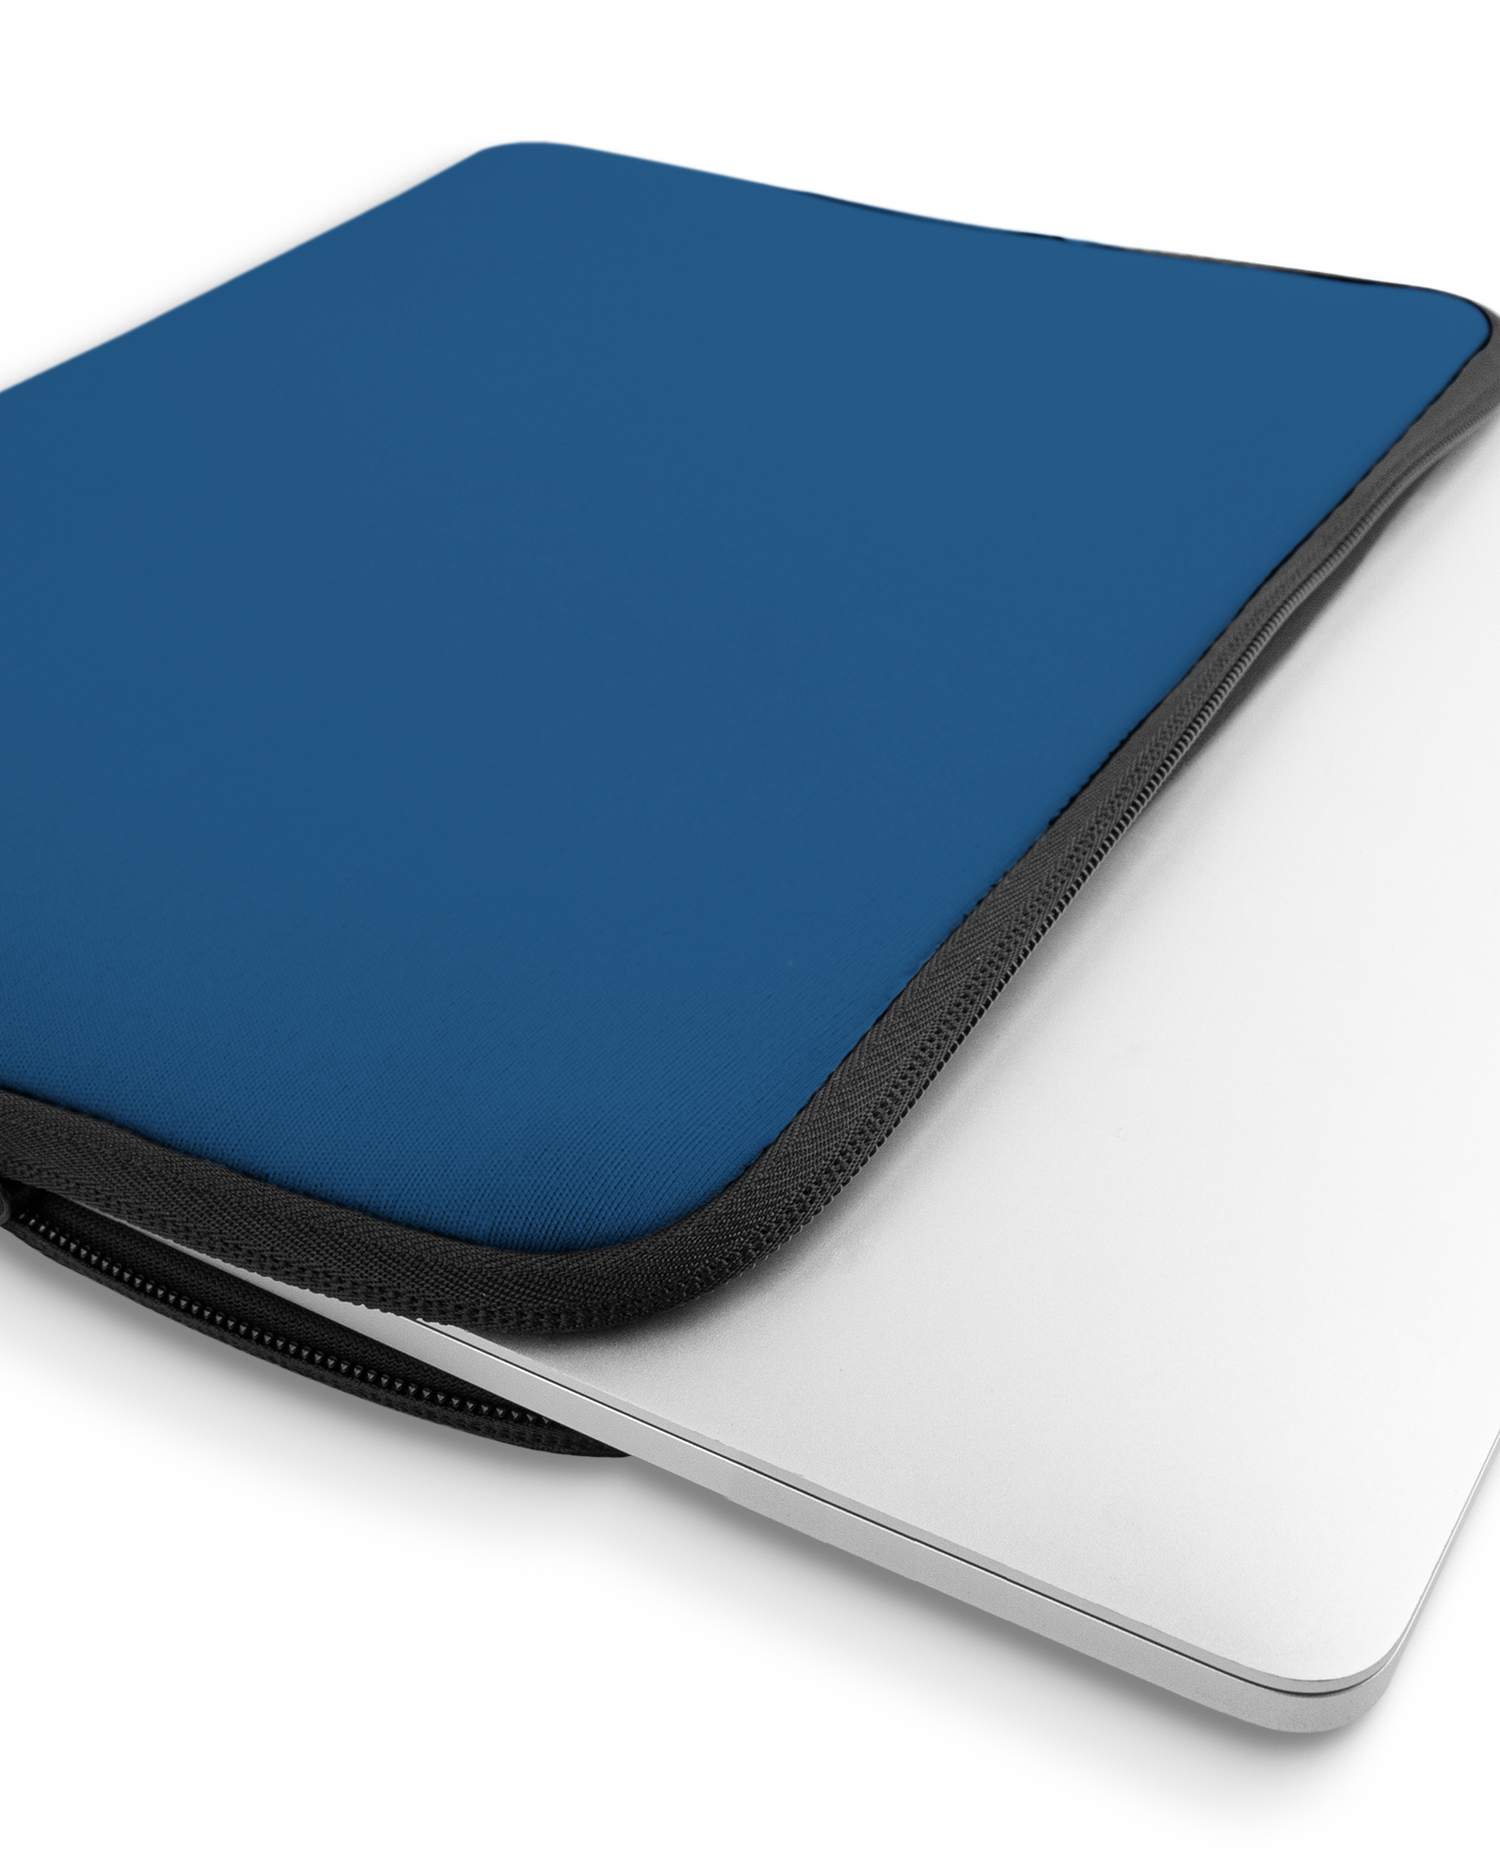 CLASSIC BLUE Laptophülle 16 Zoll mit Gerät im Inneren